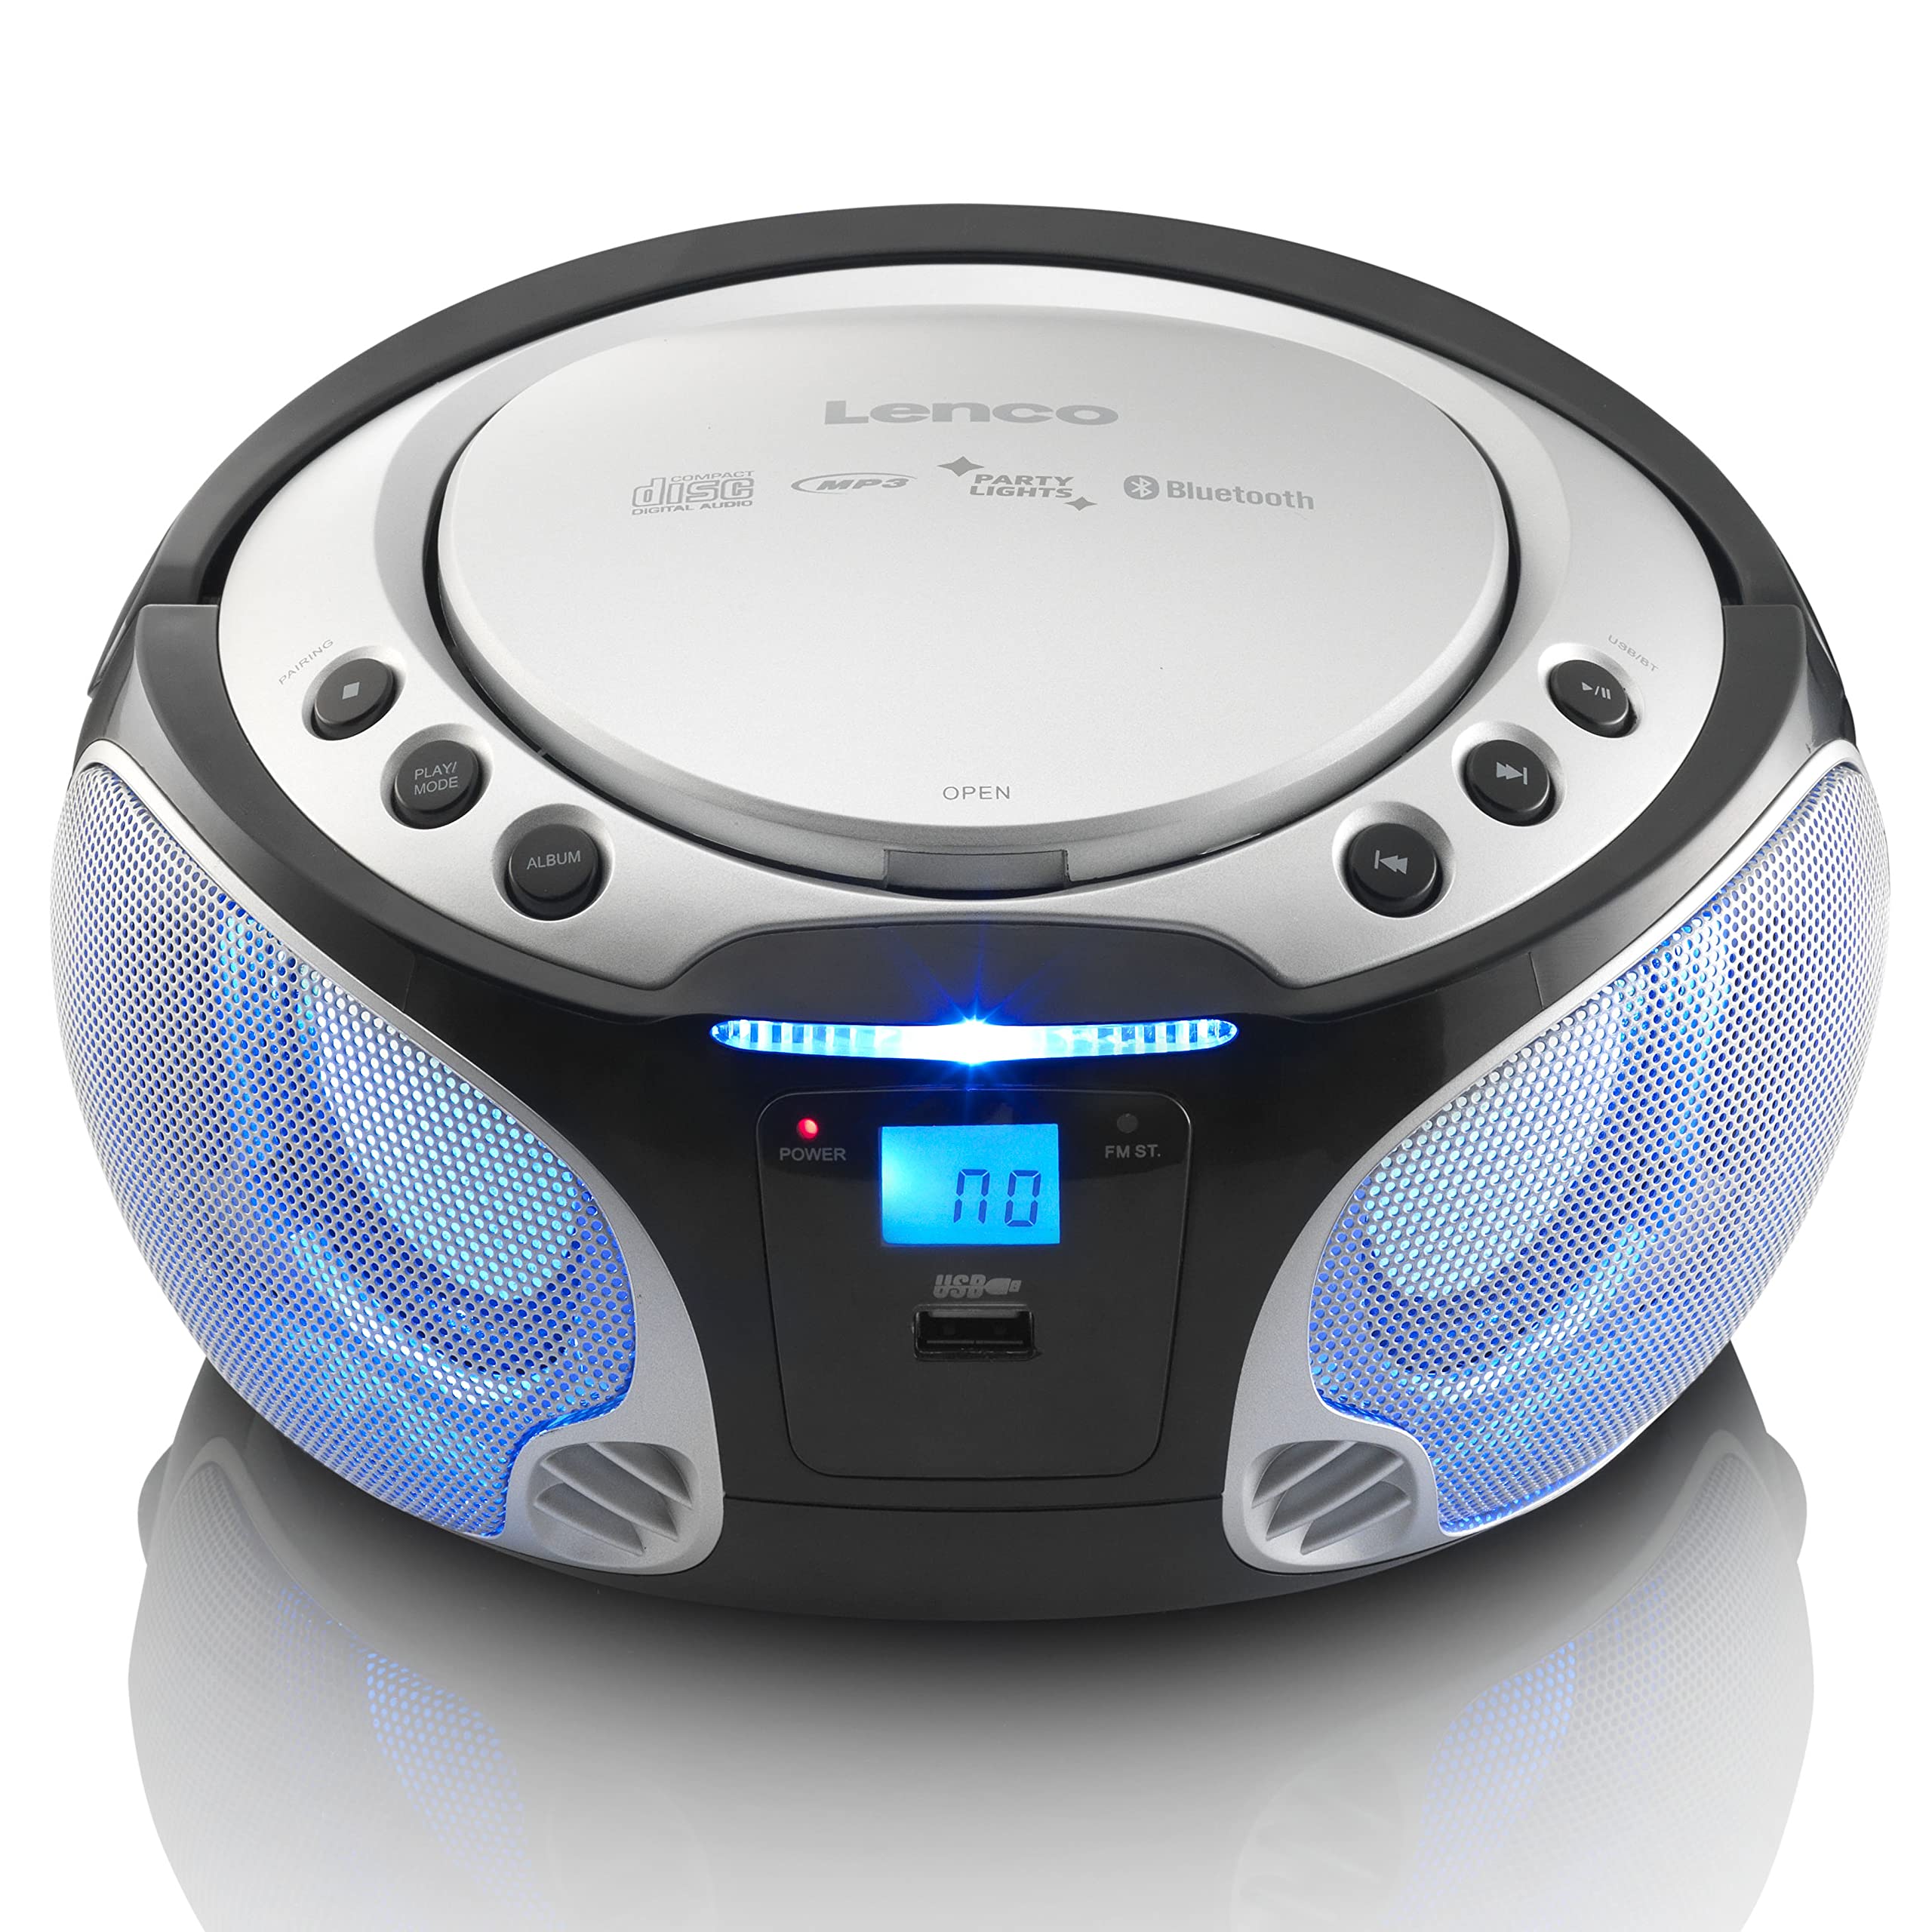 Lenco SCD-550 - CD-Player für Kinder - CD-Radio - Stereoanalage - Boombox - MP3 und USB Player - Bluetooth - 2 x 2 W RMS-Leistung - Party Lights - Silber